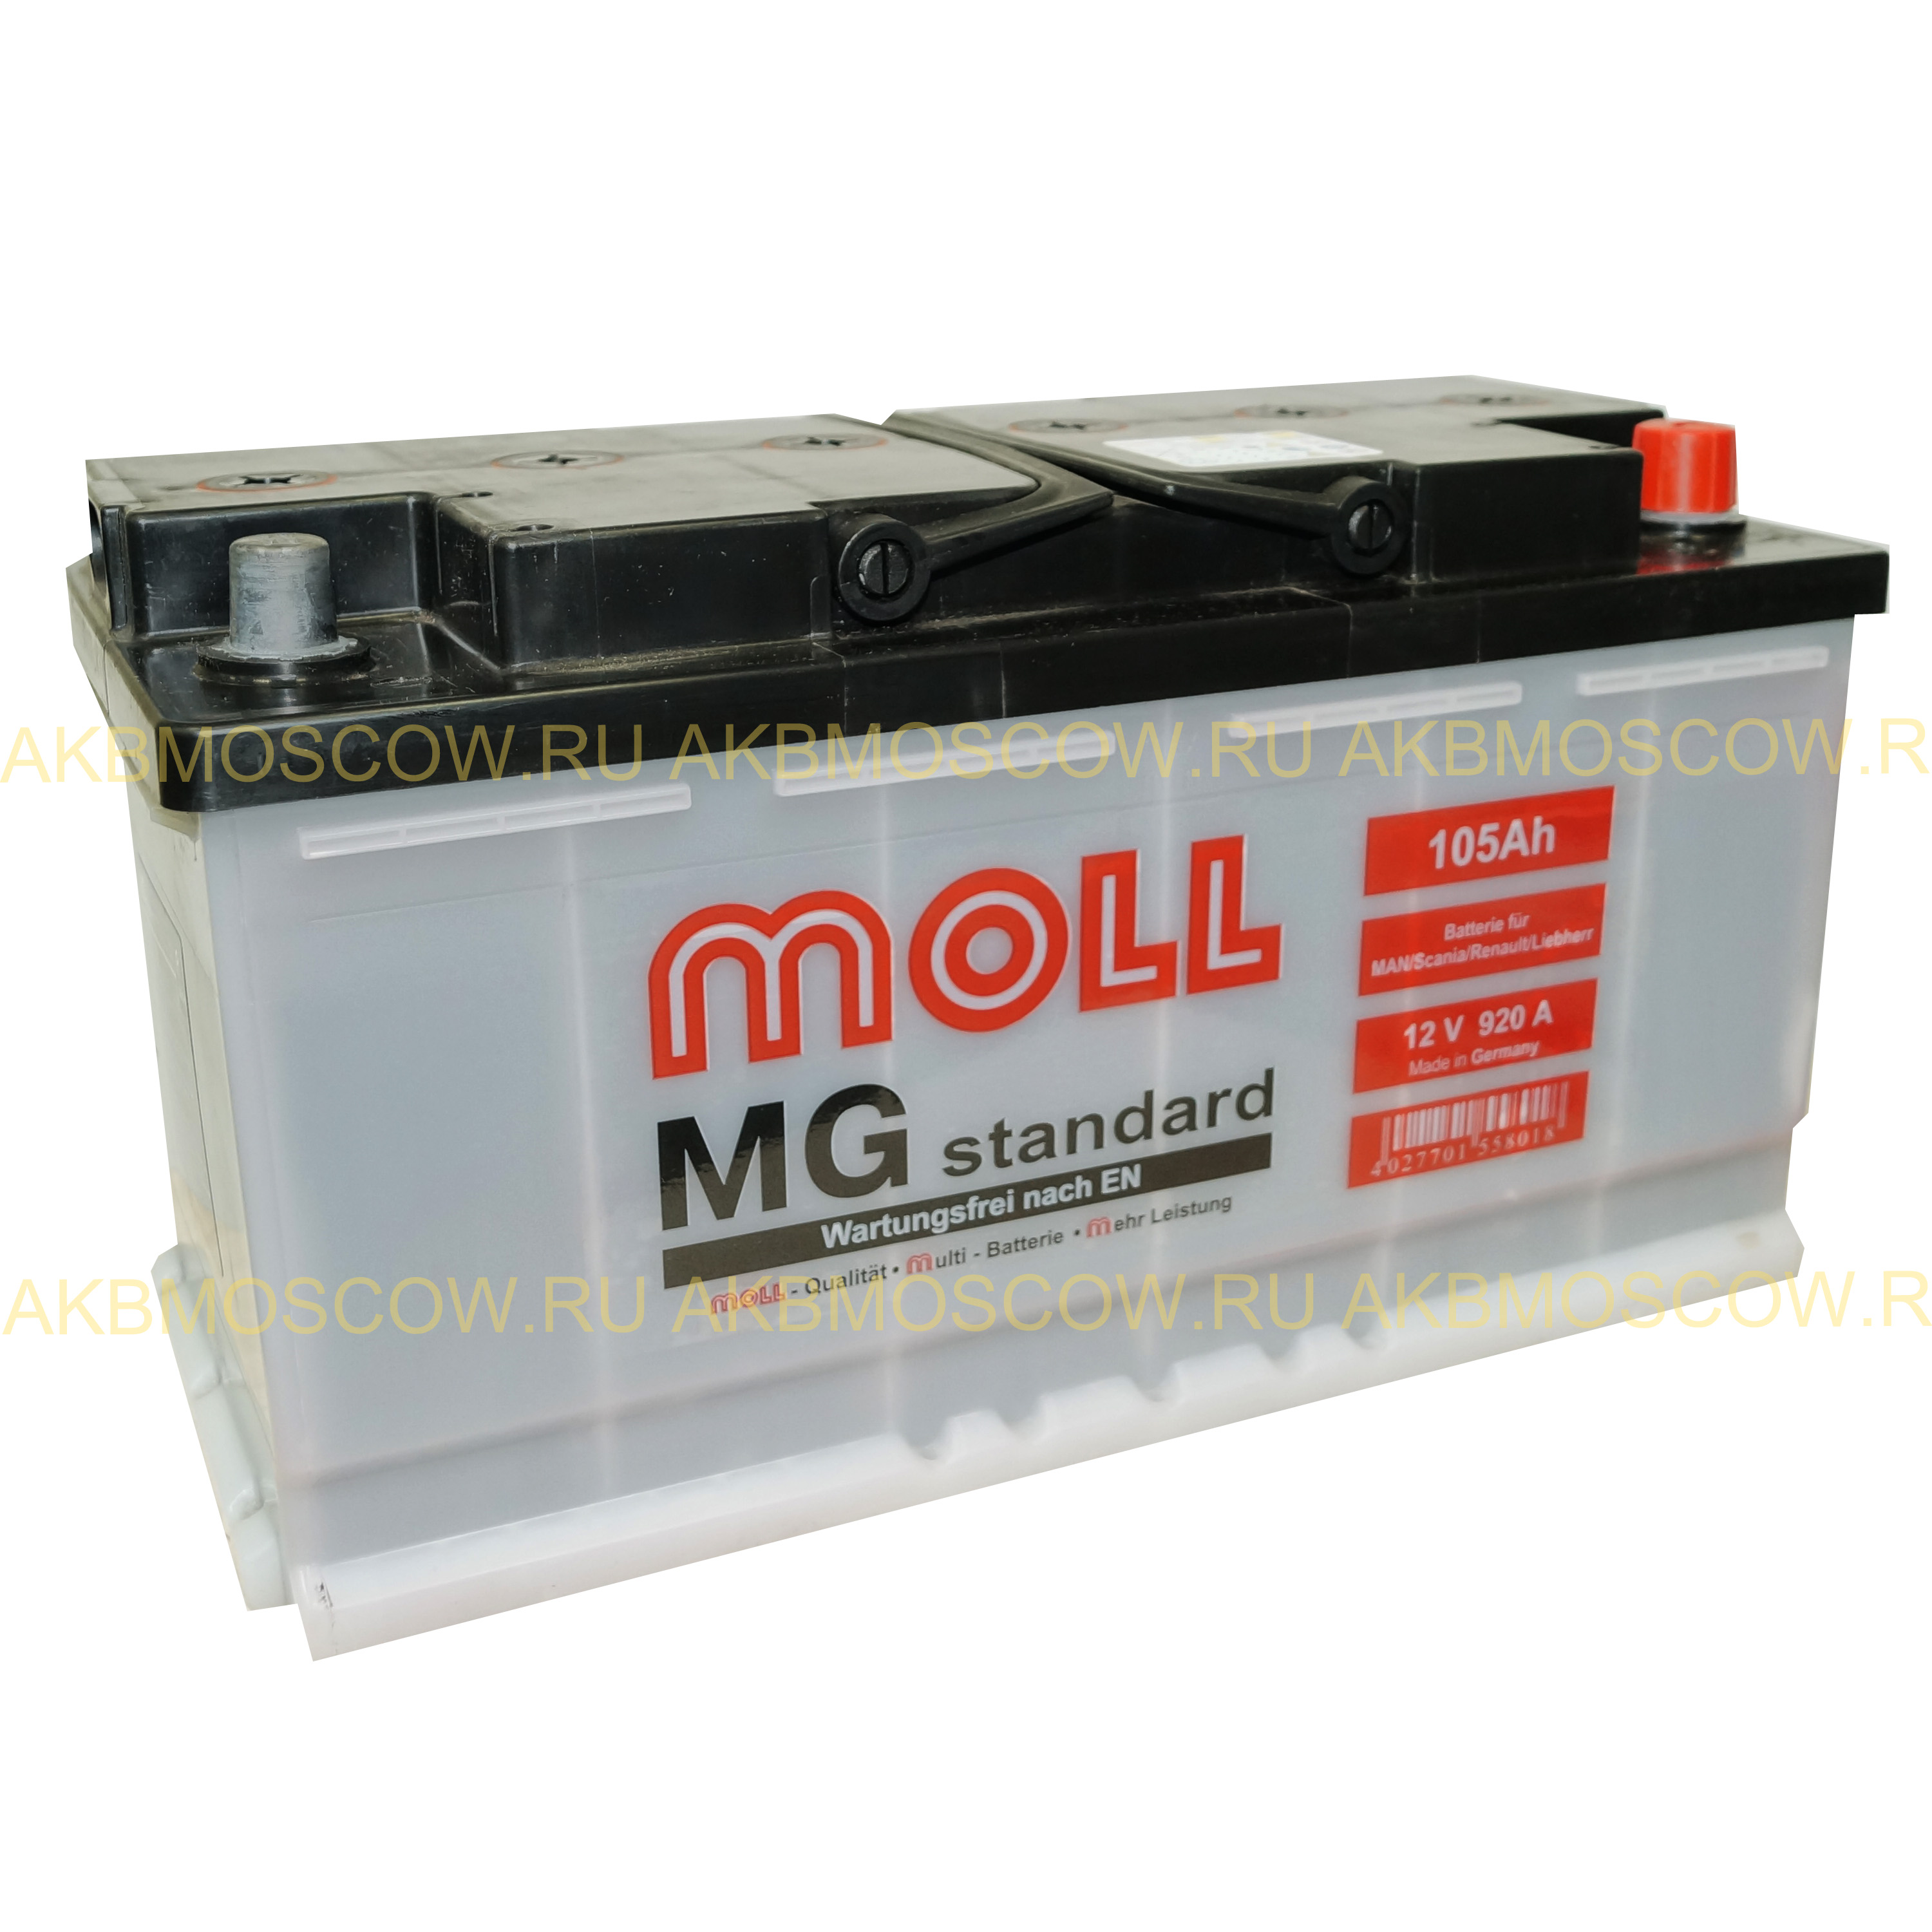 Аккумулятор автомобильный 105. Moll MG Standard 12v-105ahr. Аккумулятор Moll MG 60l. Аккумулятор автомобильный Moll MG Standard 196. Аккумулятор Moll MG 80l.